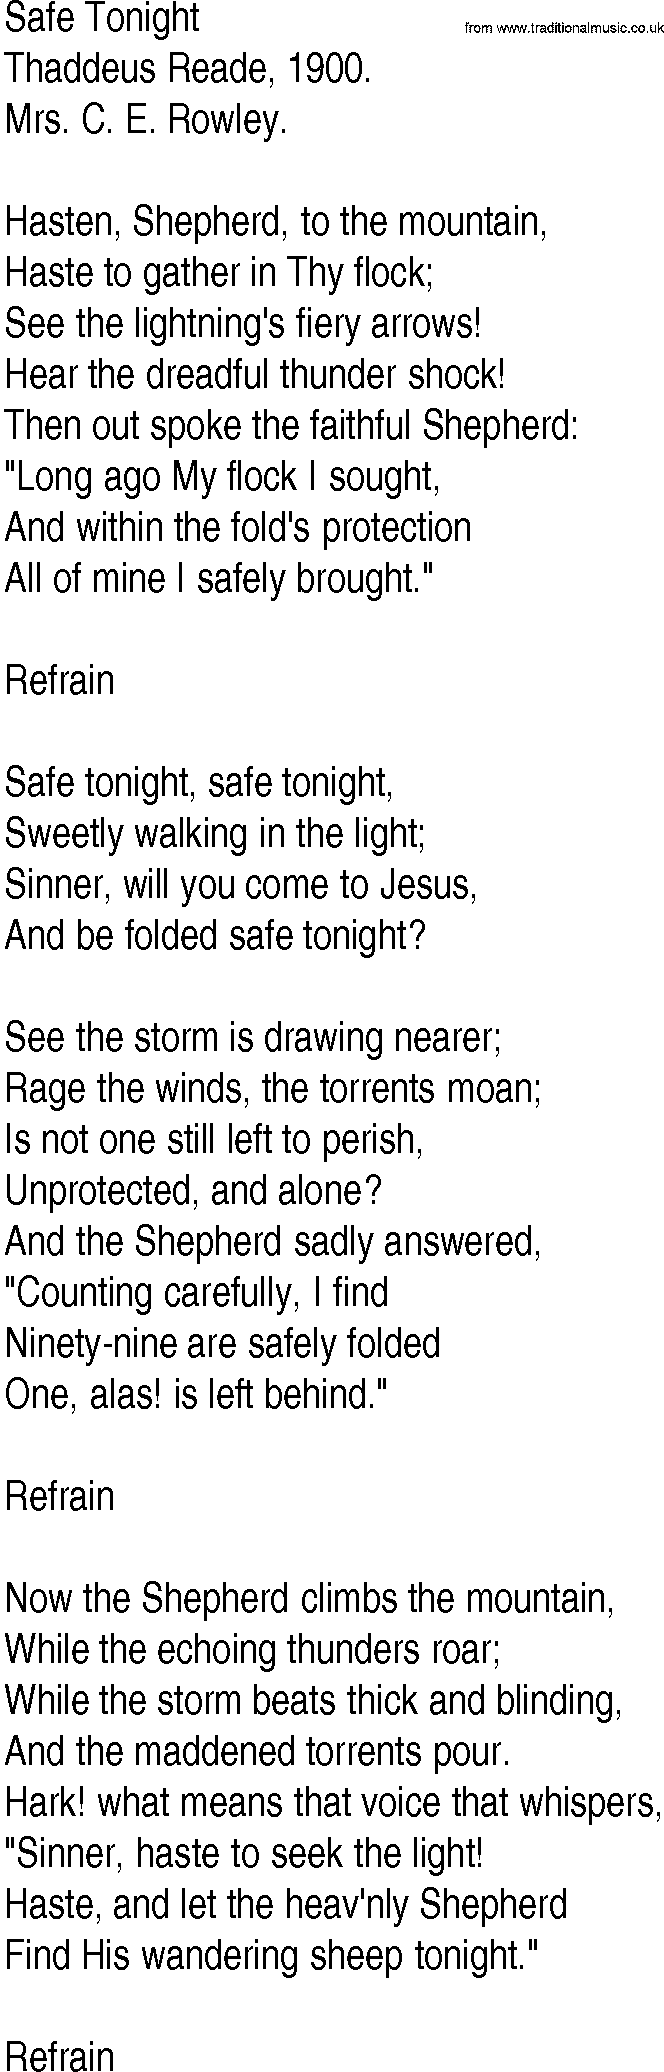 Hymn and Gospel Song: Safe Tonight by Thaddeus Reade lyrics